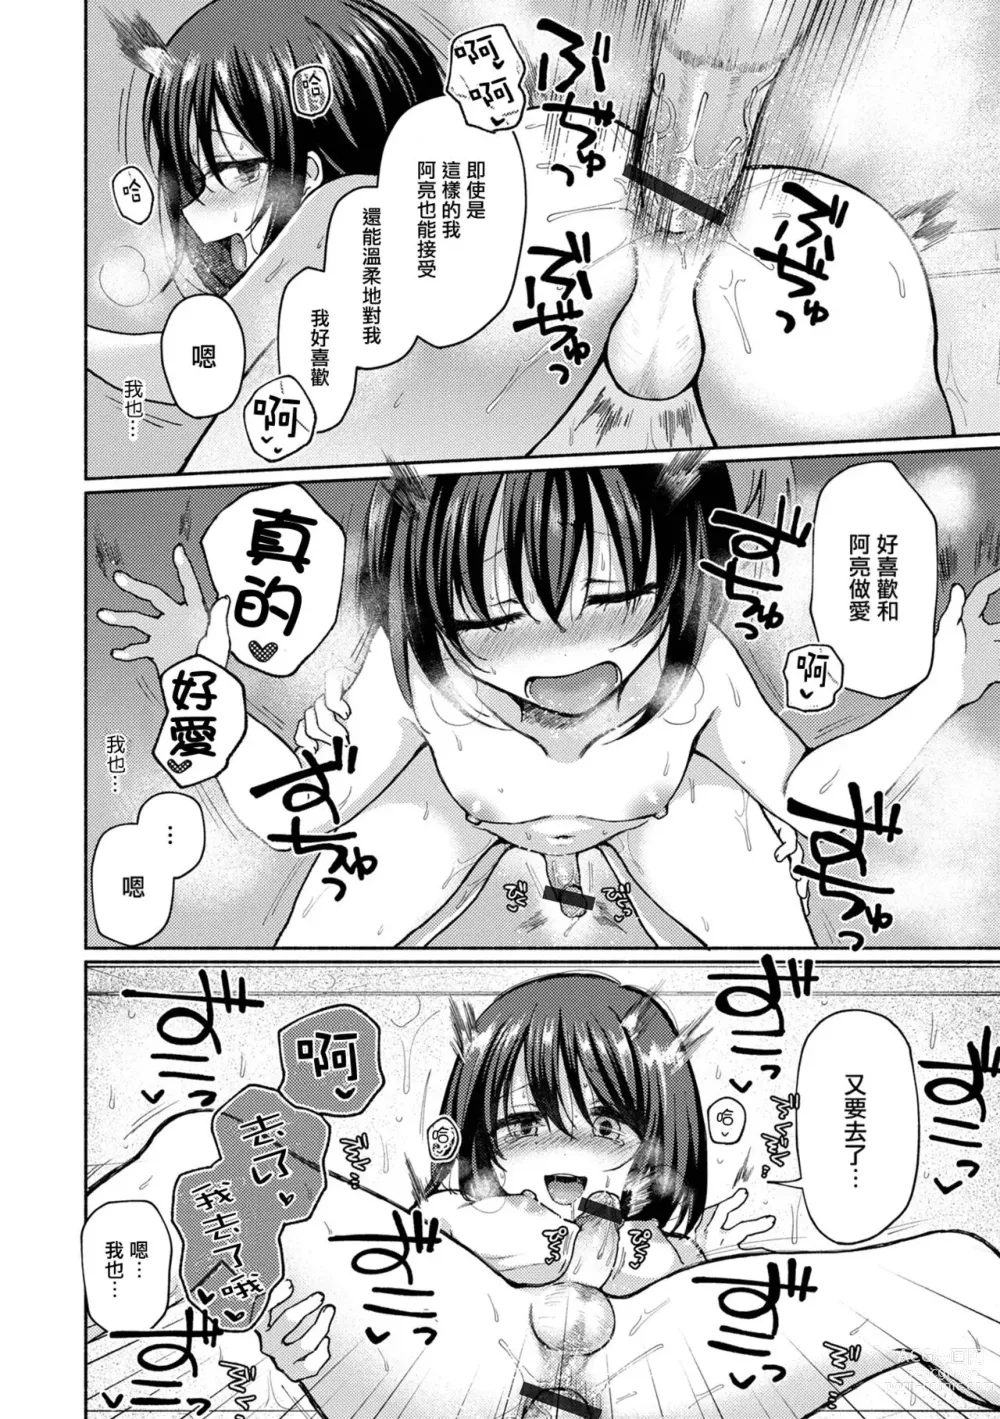 Page 15 of manga Anoko wa Yappari Doko demo Yaritagaru